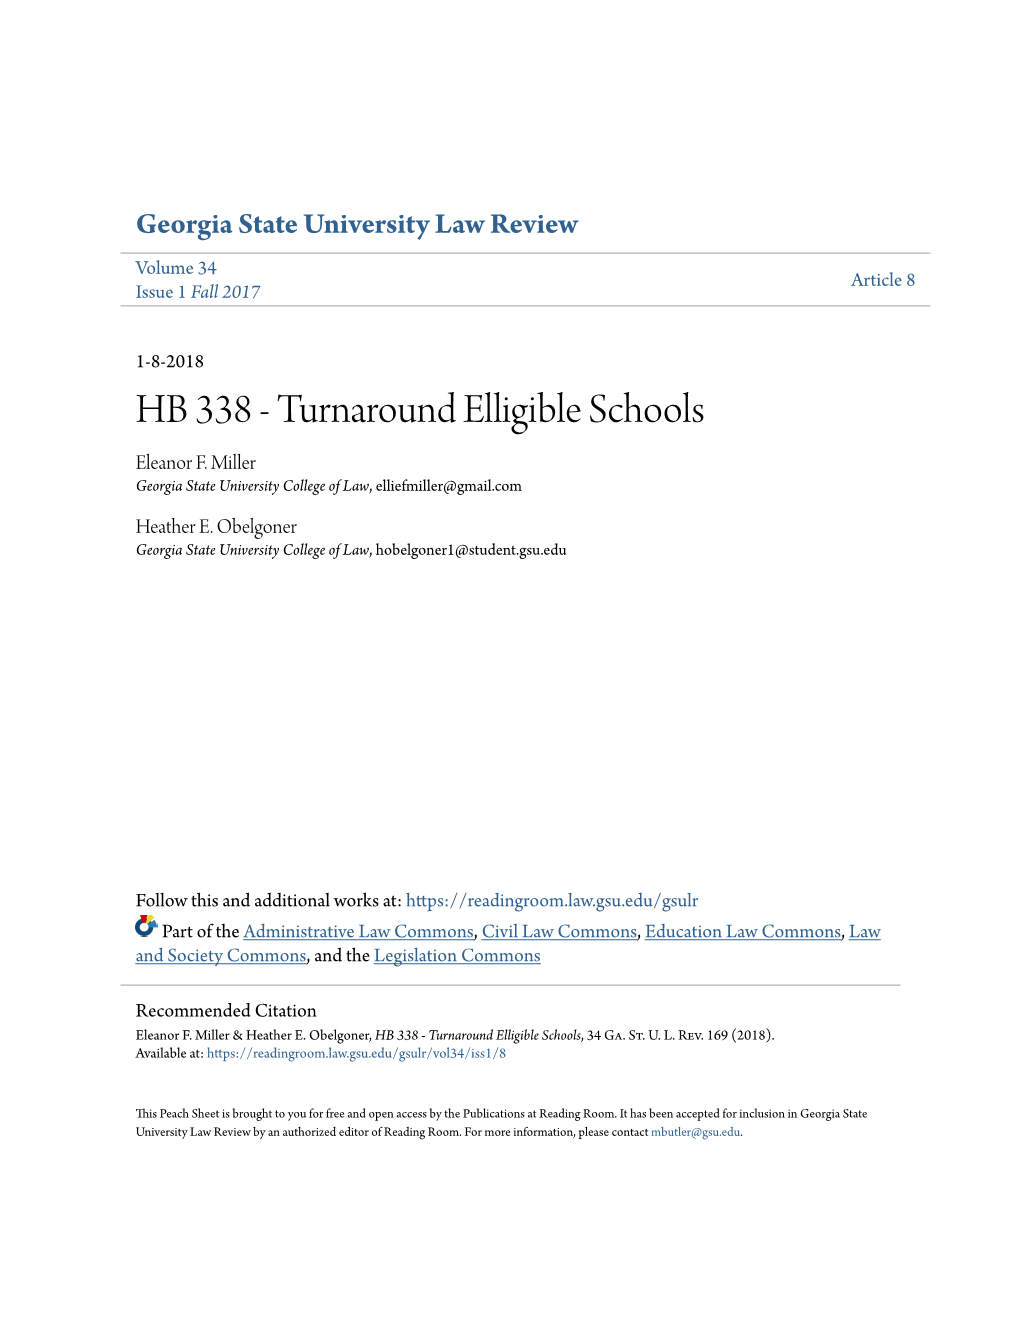 HB 338 - Turnaround Elligible Schools Eleanor F